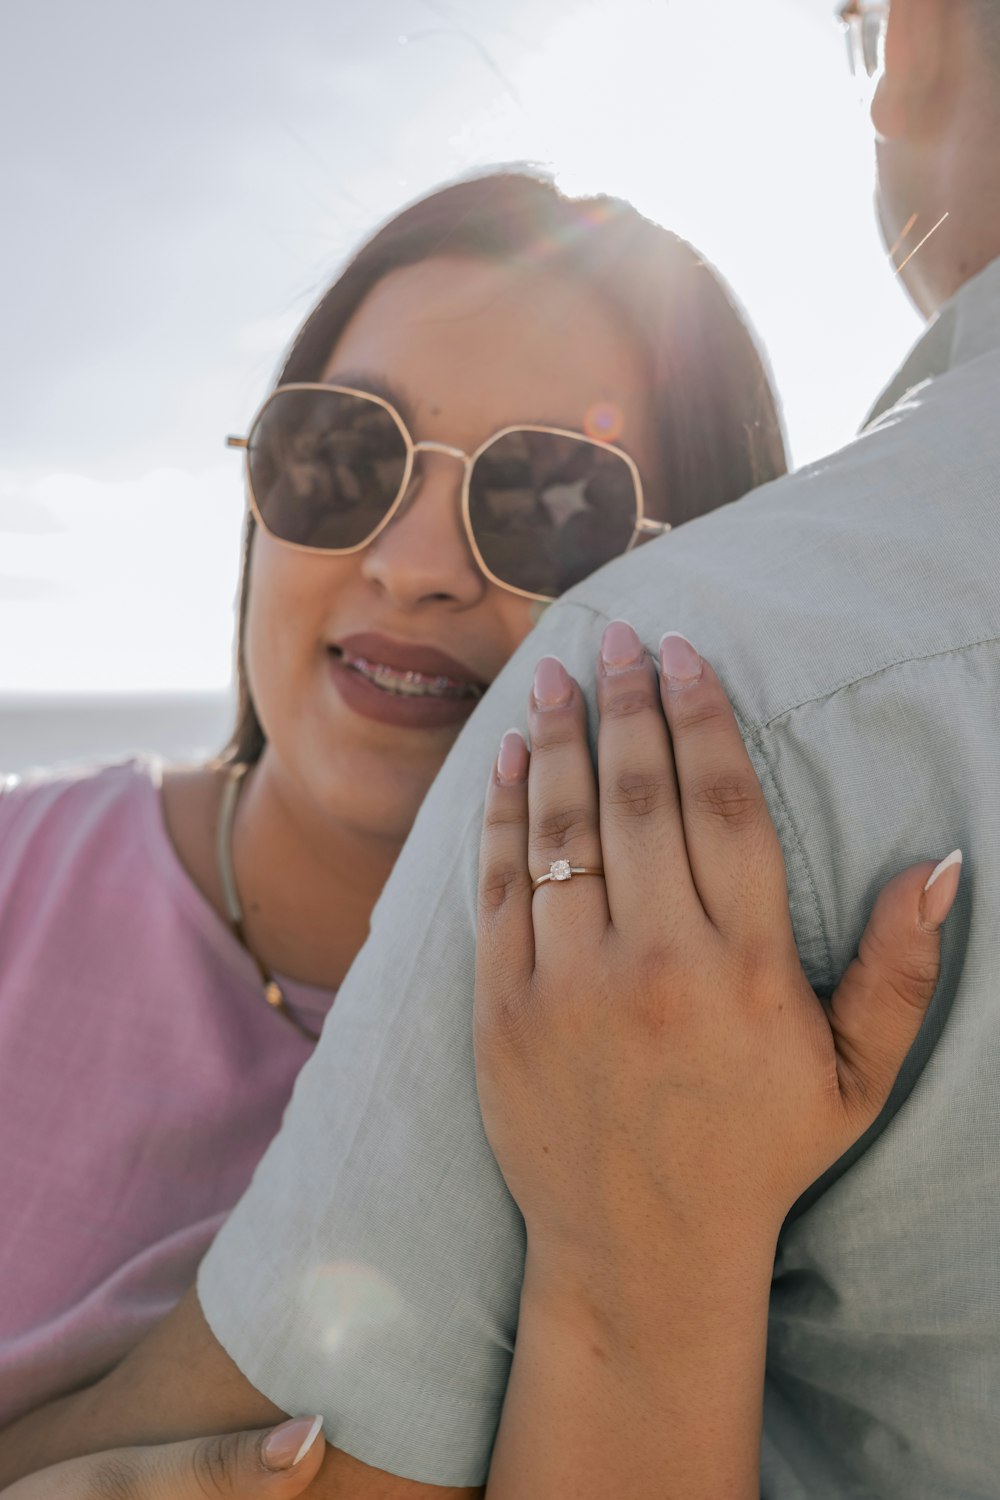 a man holding a woman on the beach